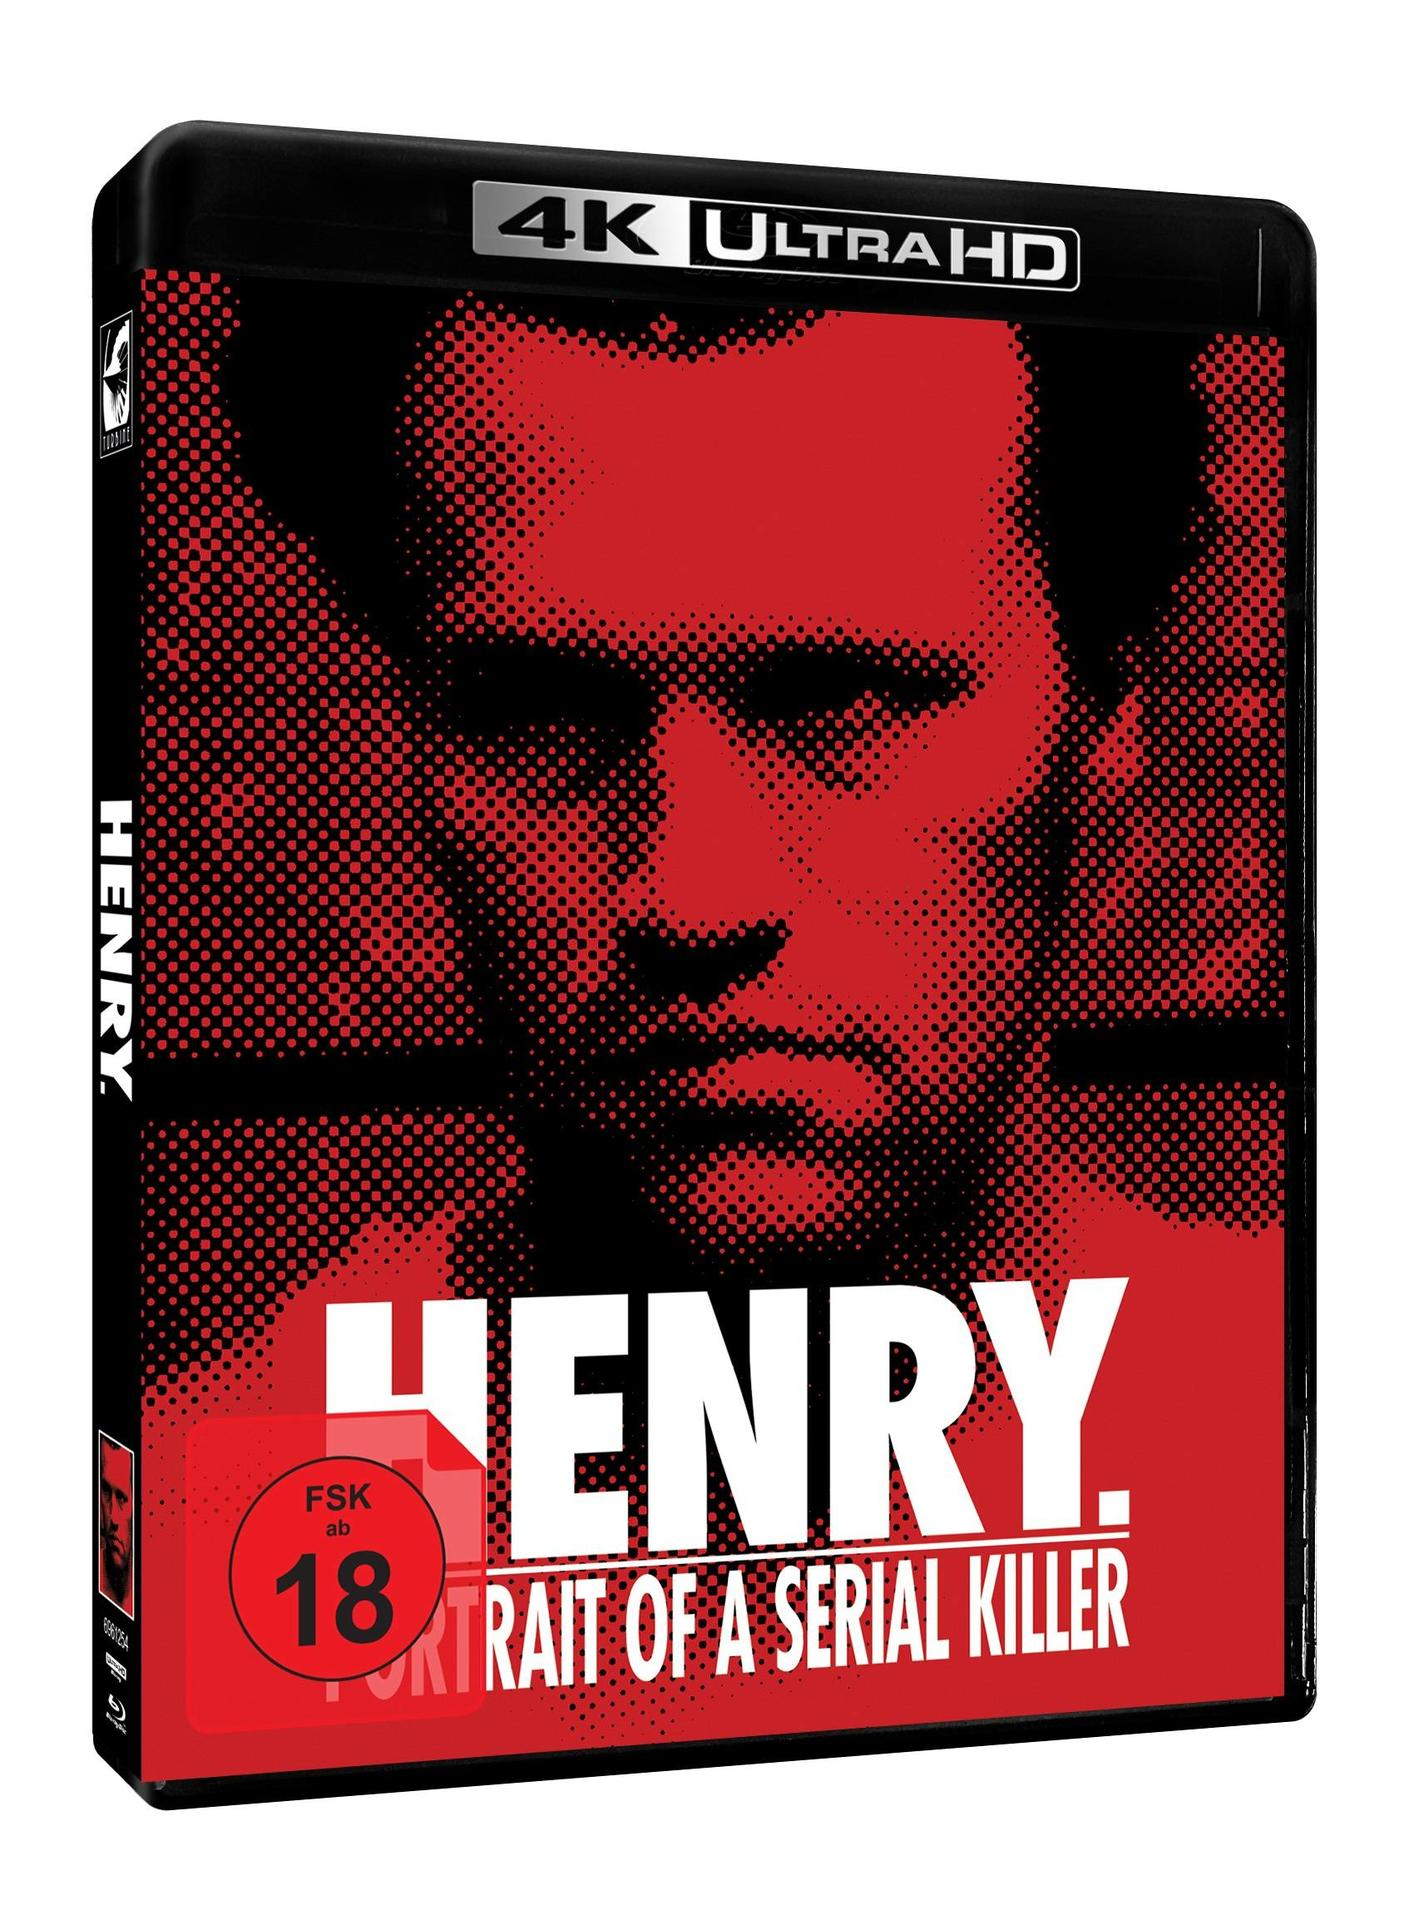 Ultra Blu-ray a Serial Killer + Blu-ray Portrait Henry: HD of 4K